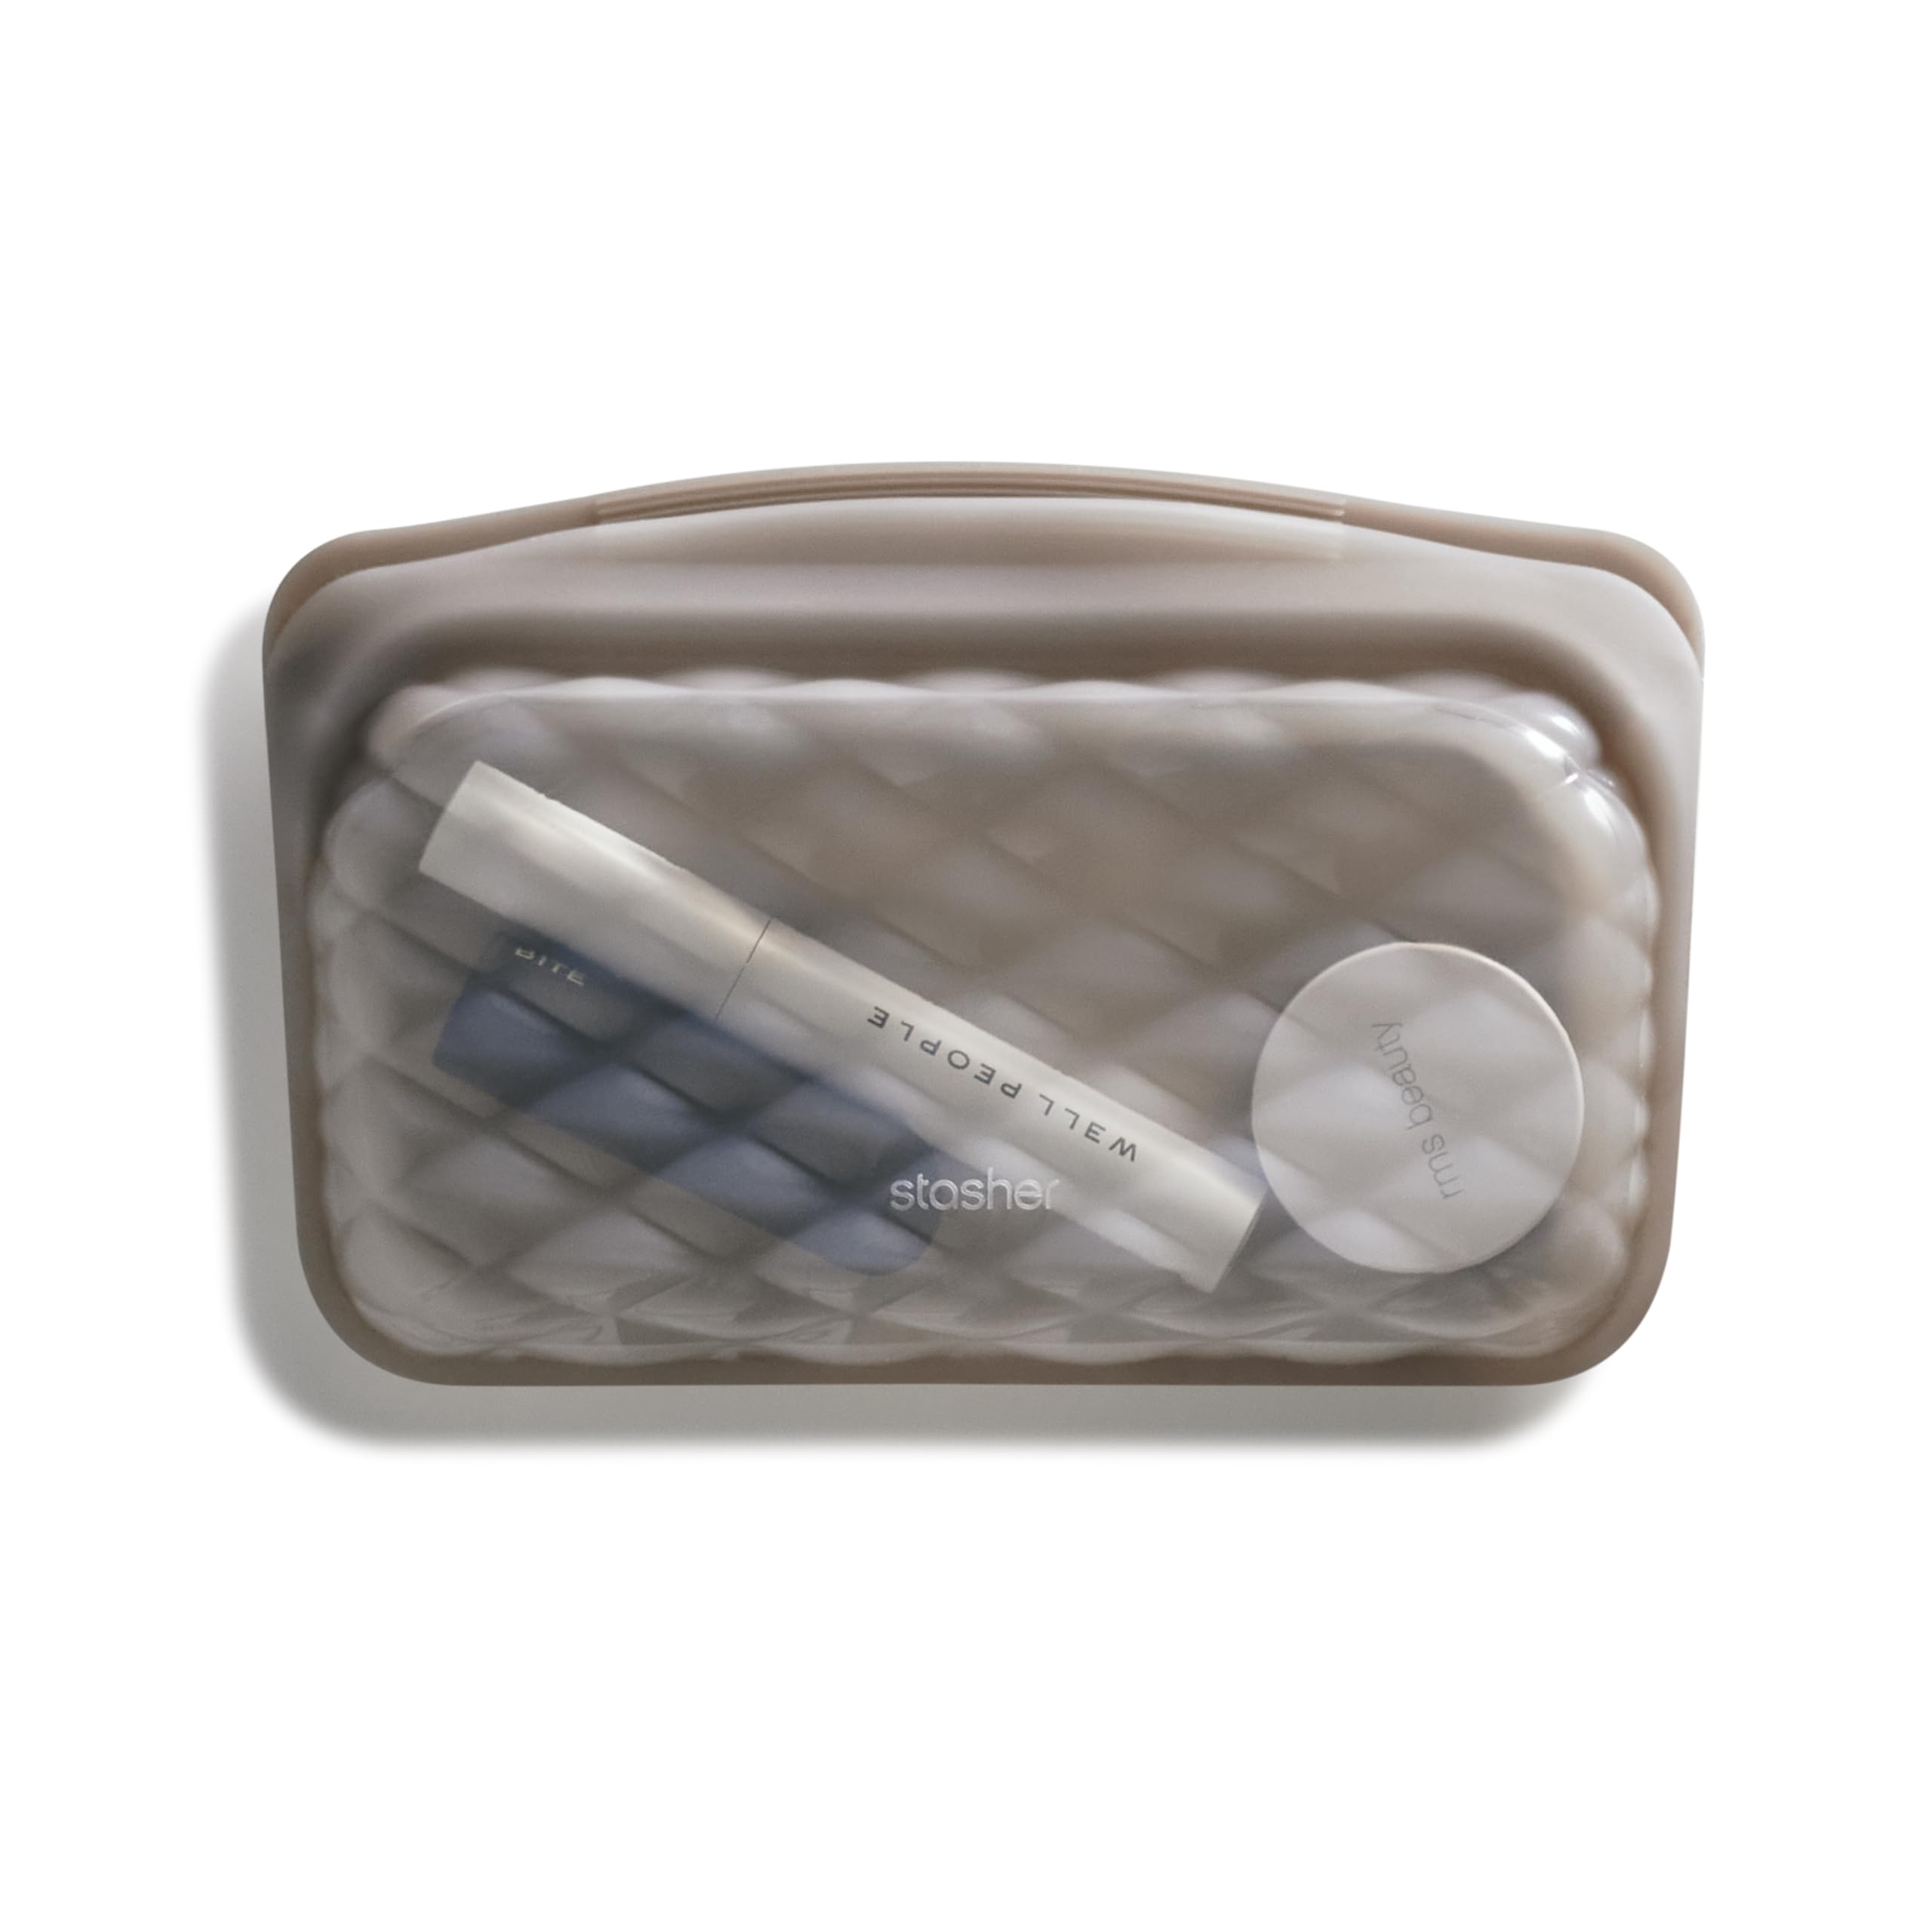 Stasher Reusable Silicone Travel Makeup Bag, Storage Bag Organizer, Dishwasher Safe, Leak-free, Beauty Touch-Up, Taupe